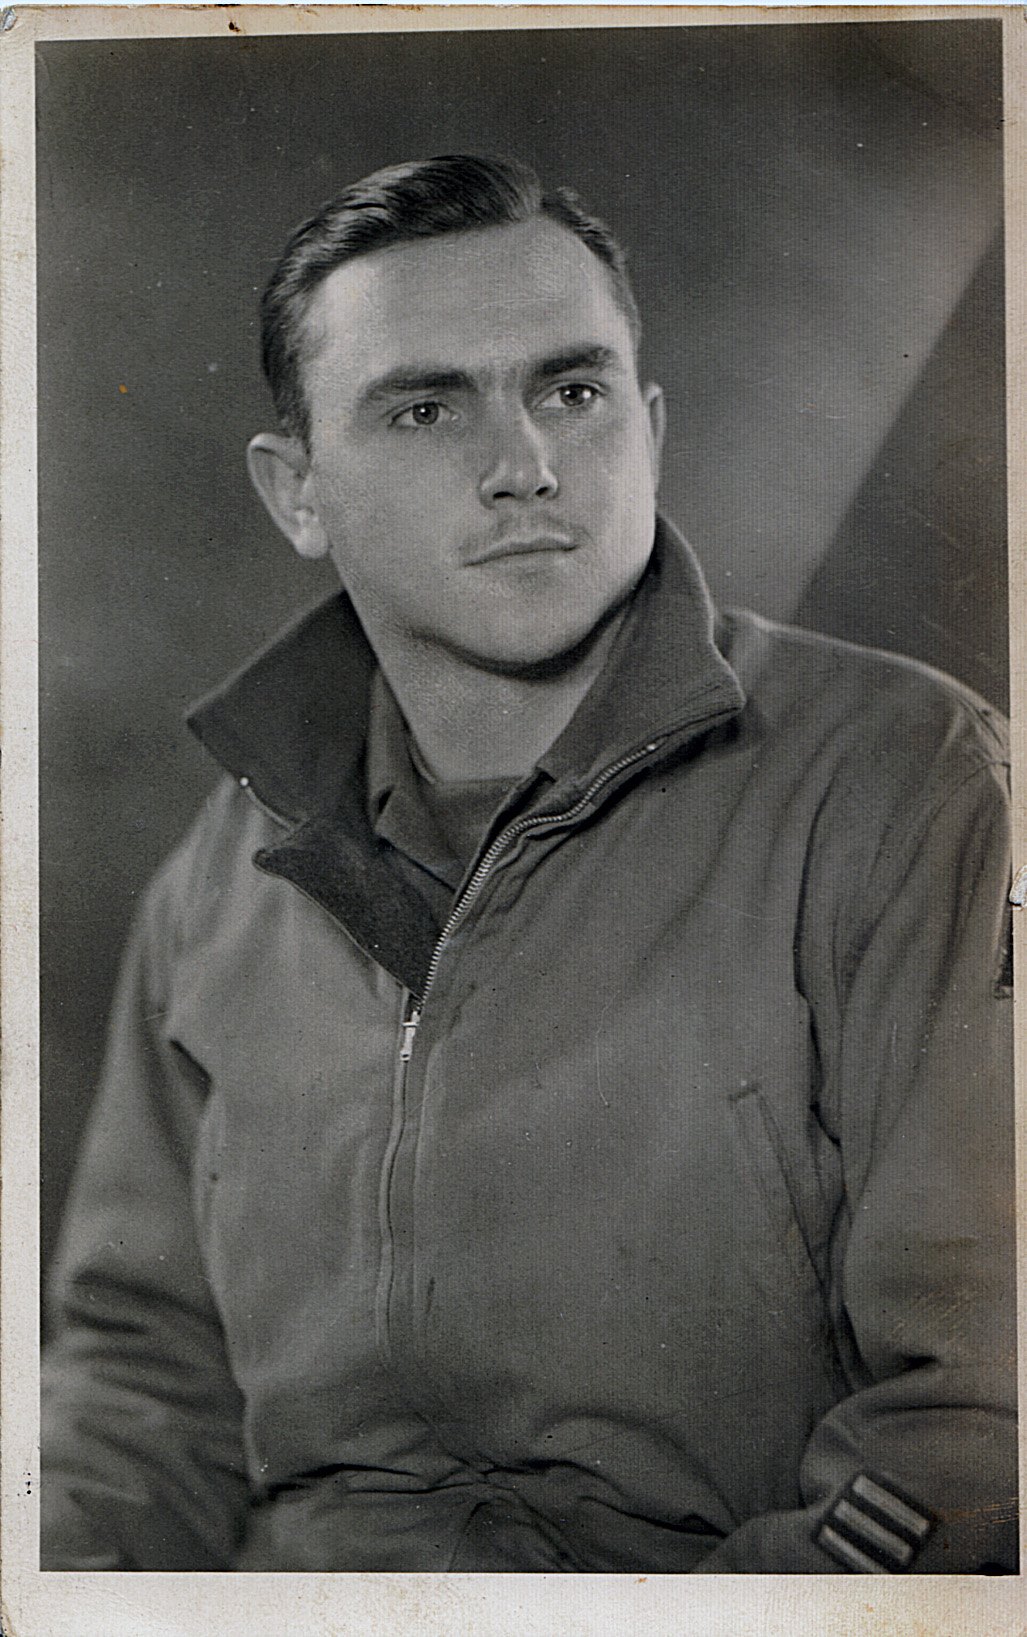 David-Edd-Hiett-“Tex”-of-C-Company-17th-Armored-EngineersBelgium-March-1945s-Mark-Hiett-FB